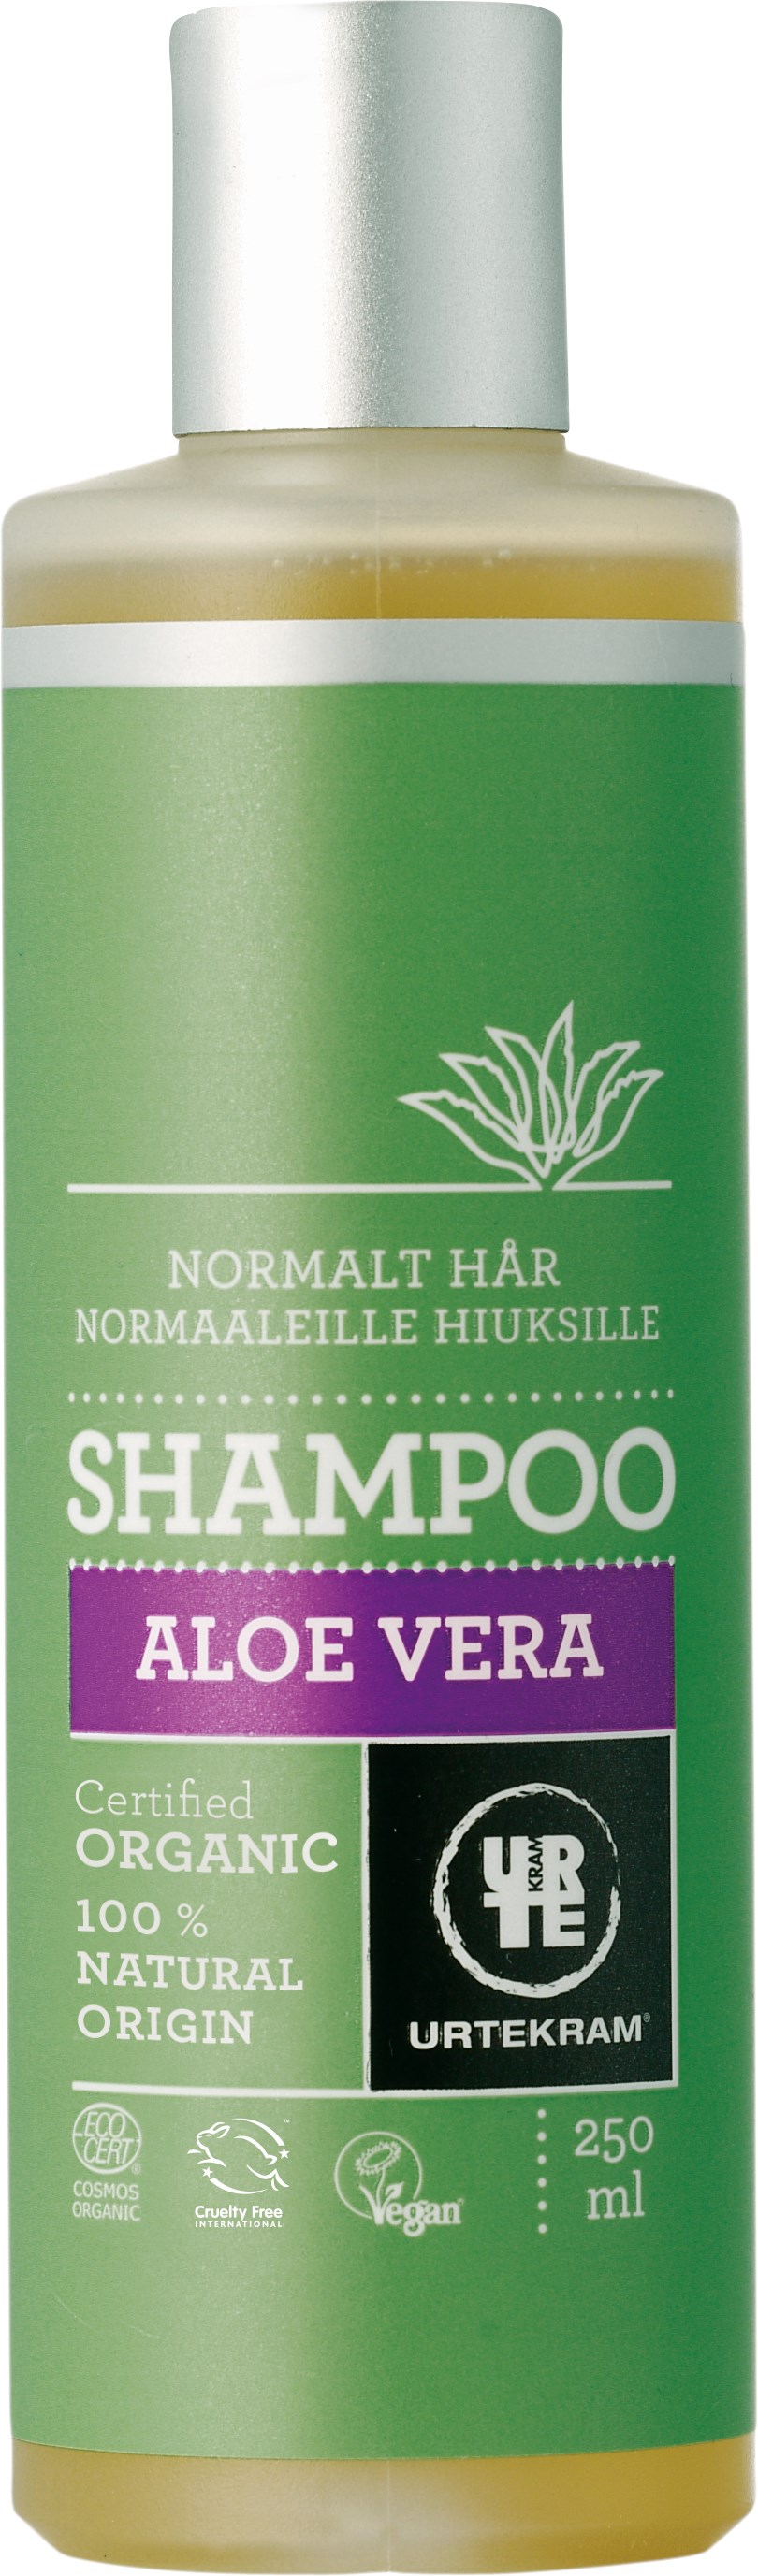 Urtekram Aloe Vera Shampoo Normal 250ml